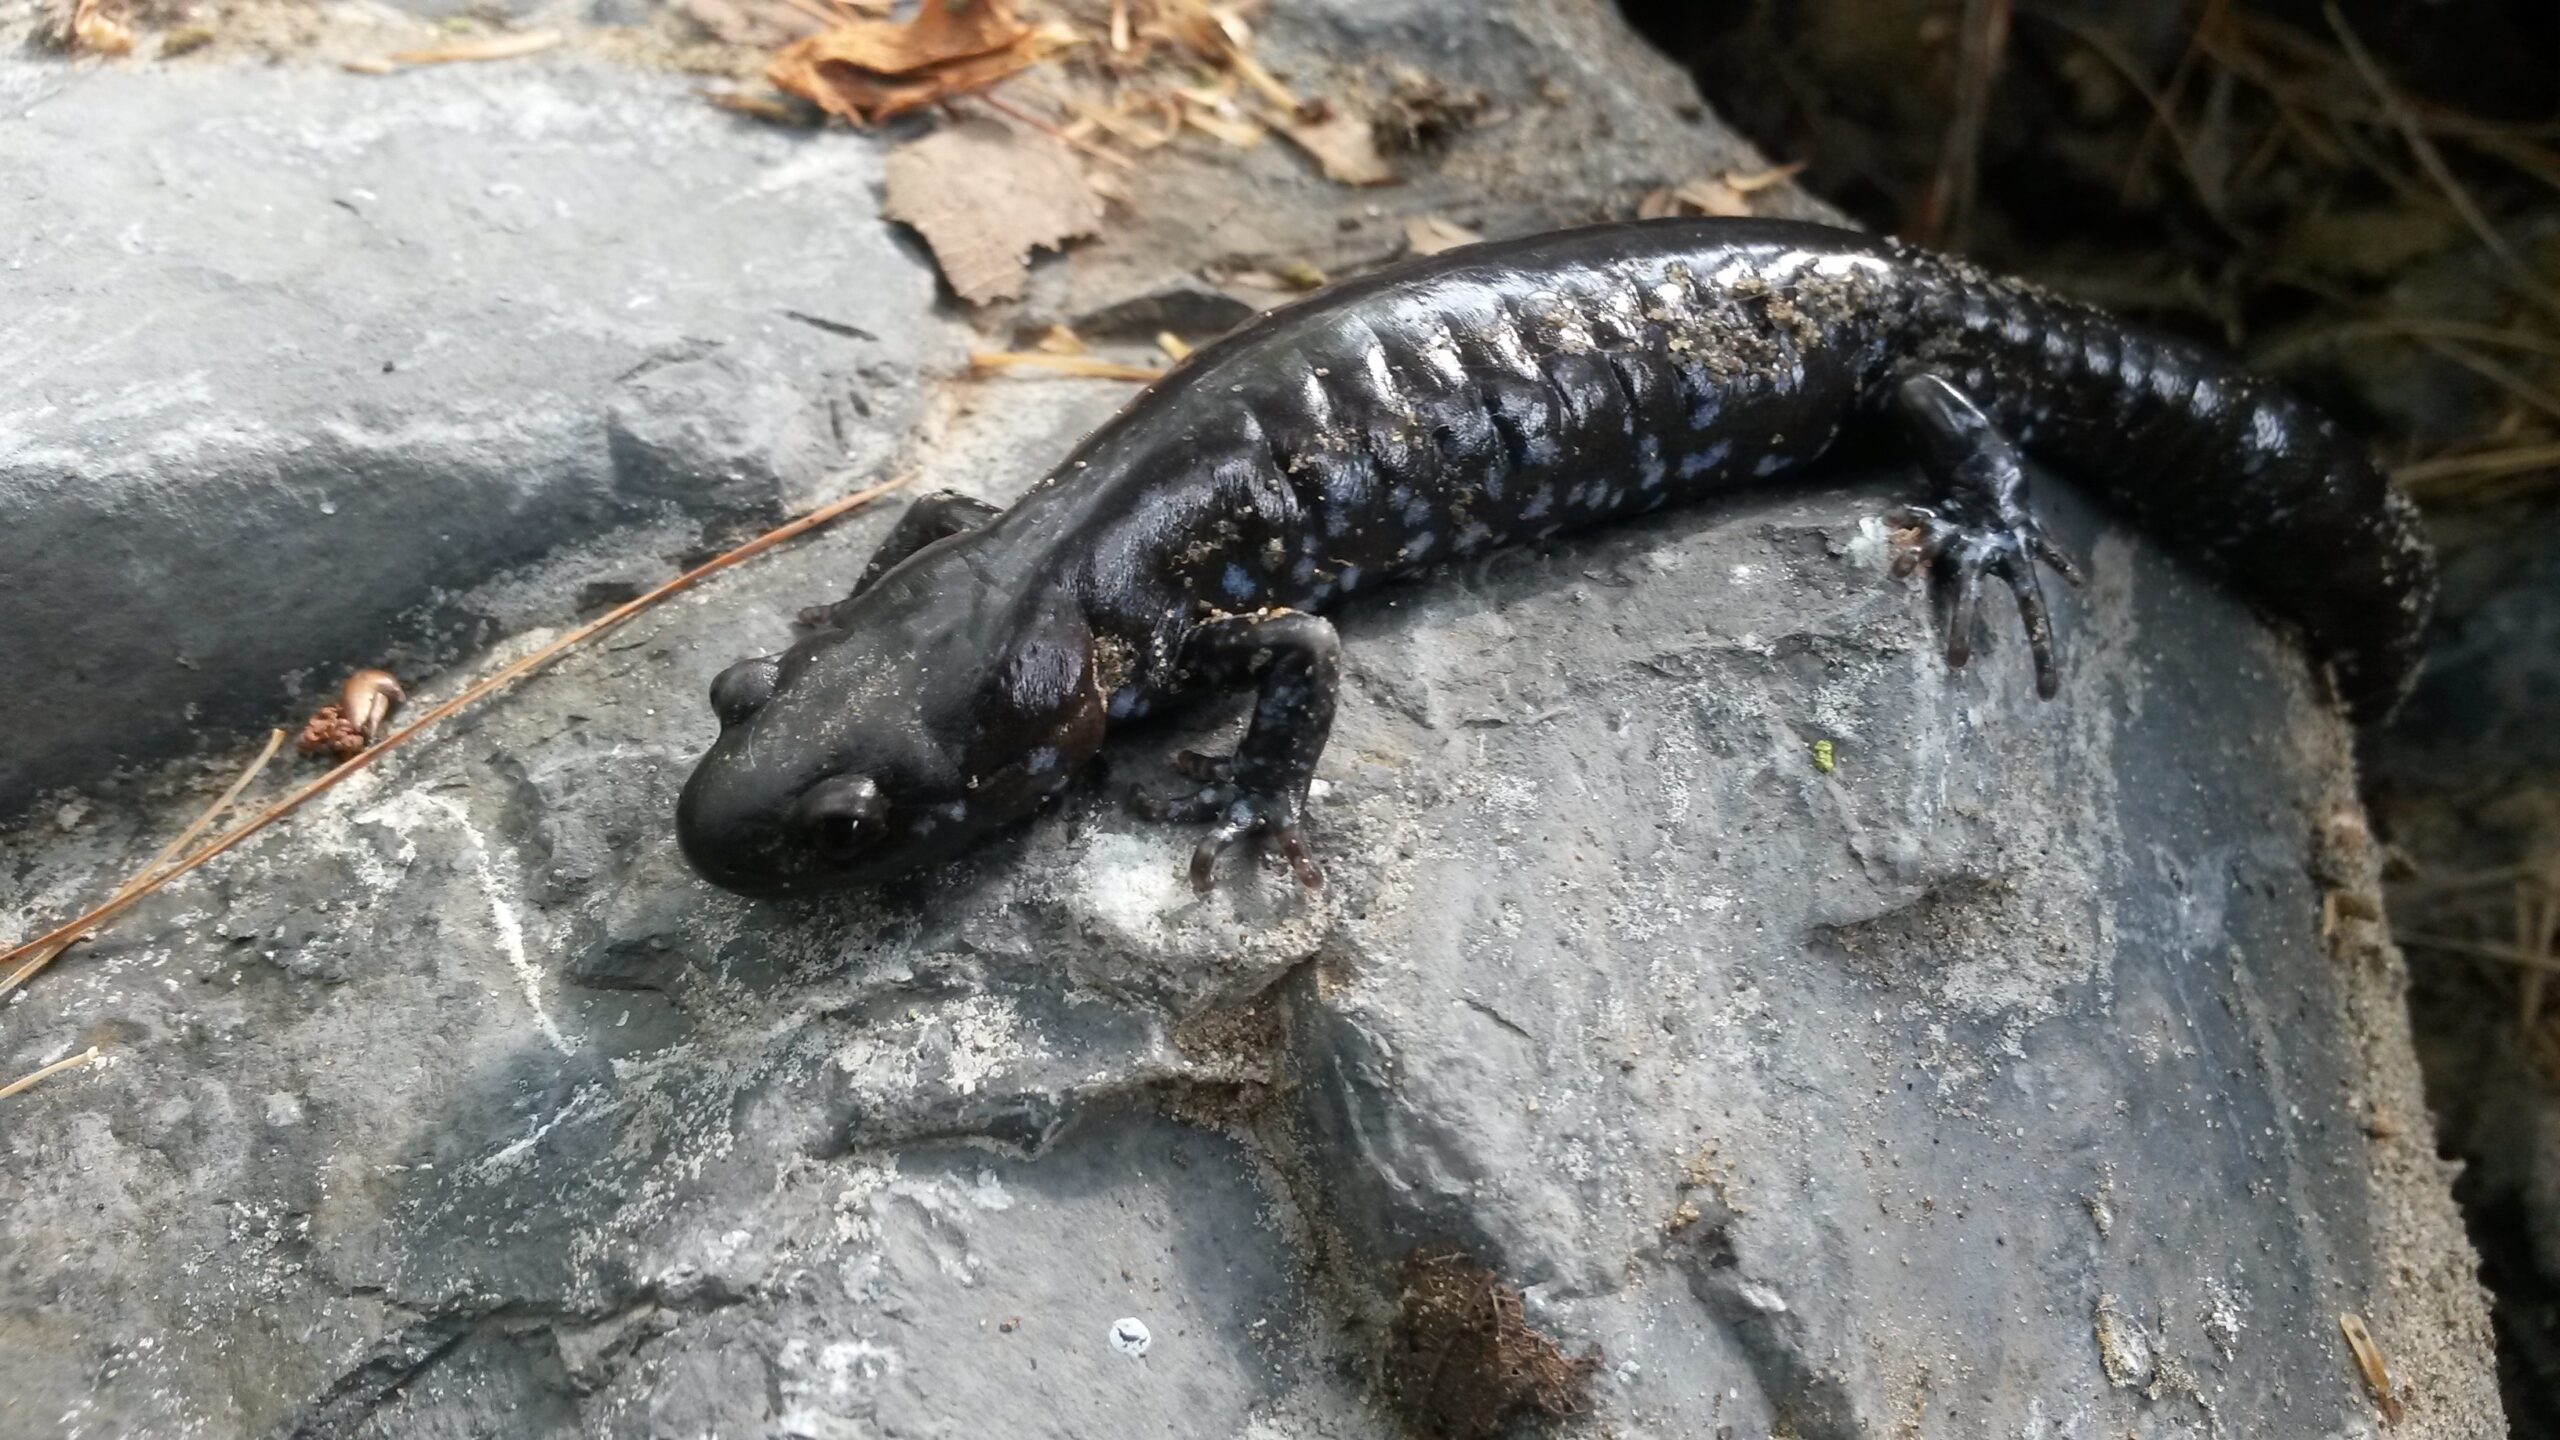 salamandre